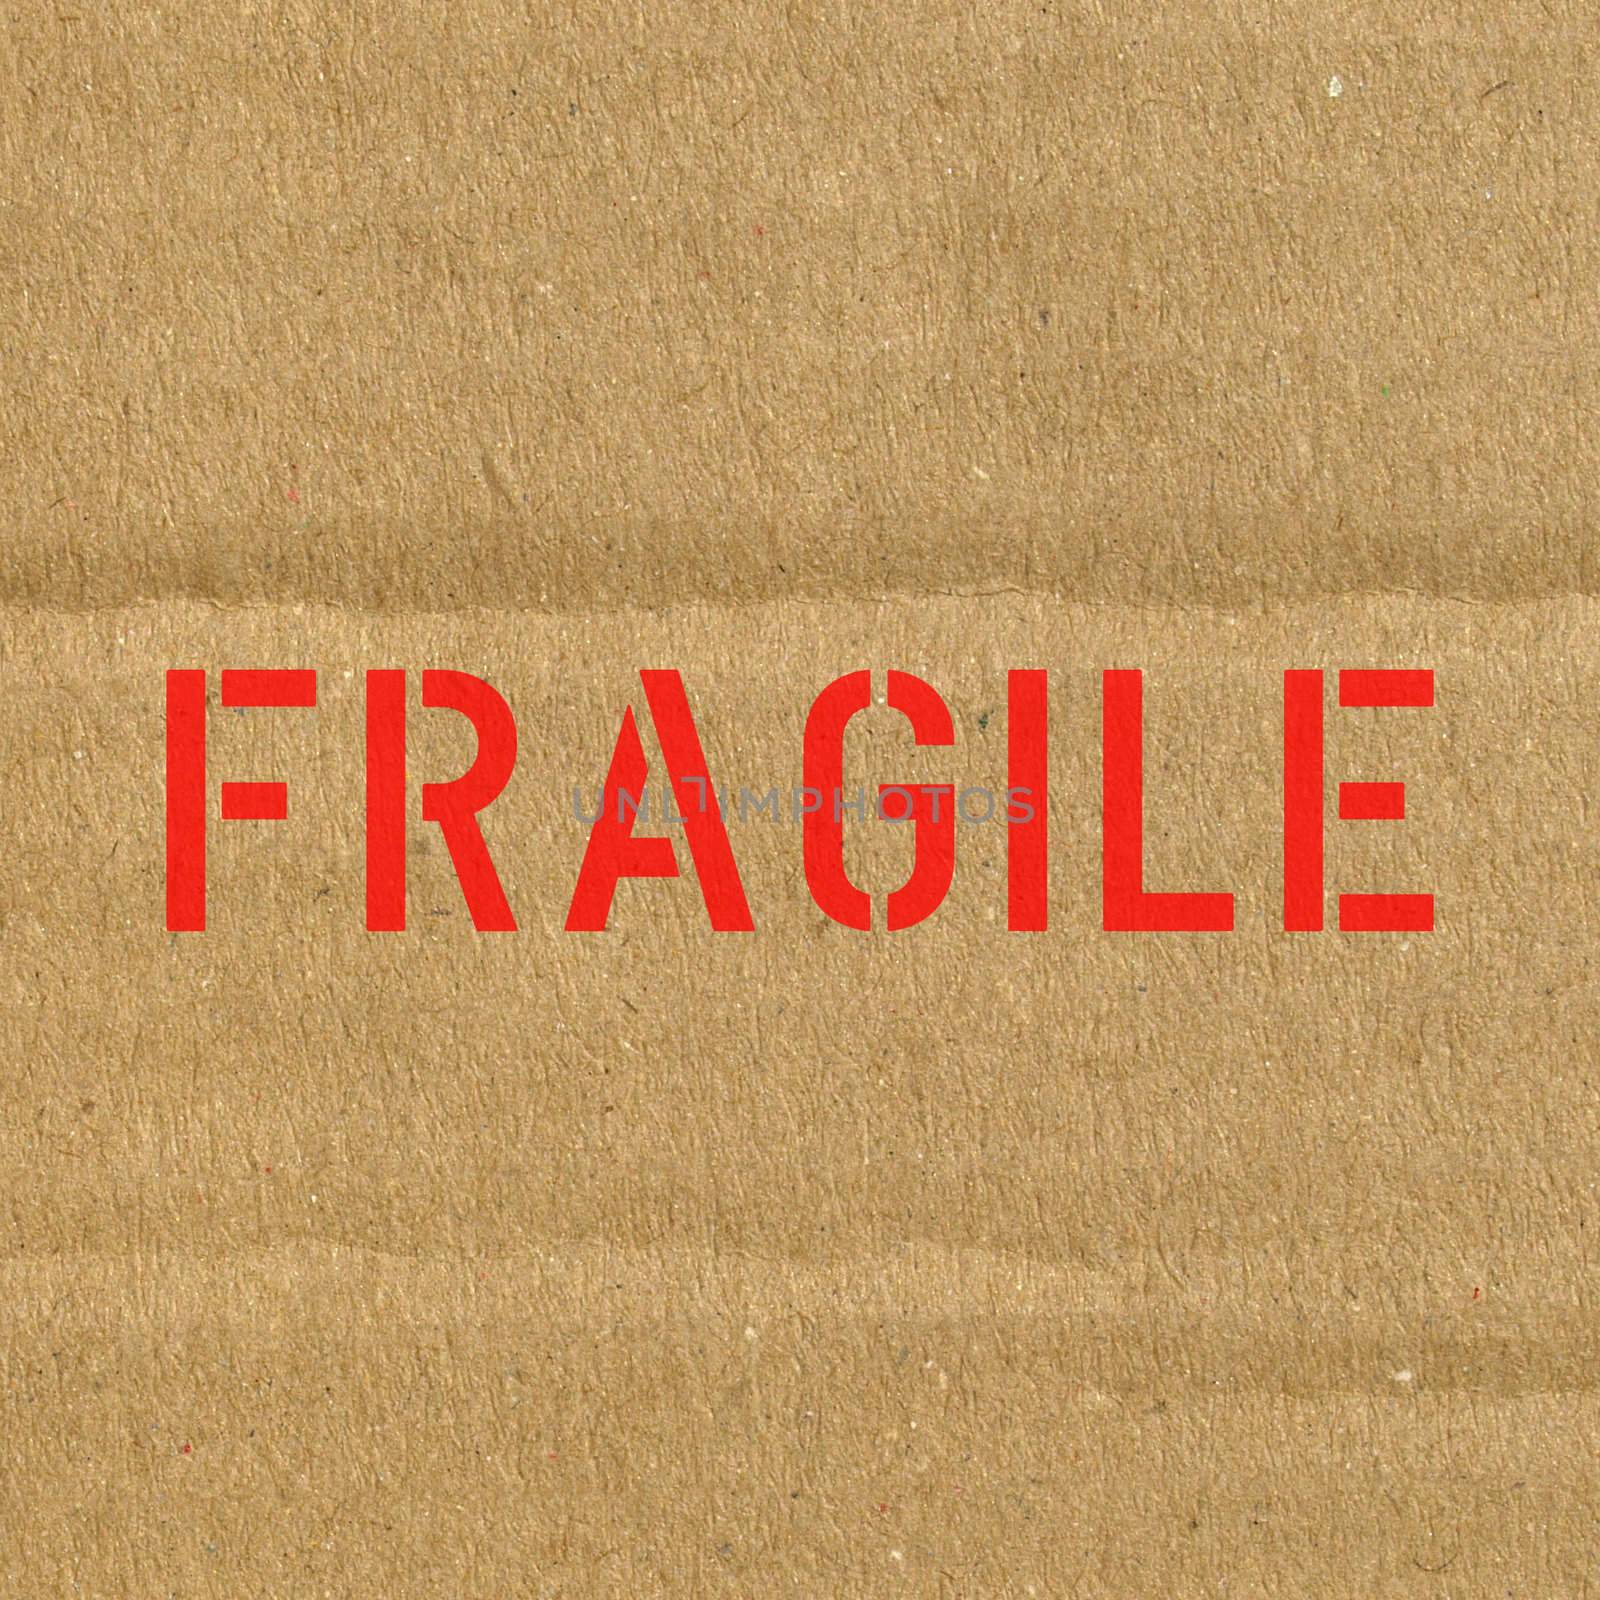 Fragile corrugated cardboard packet background